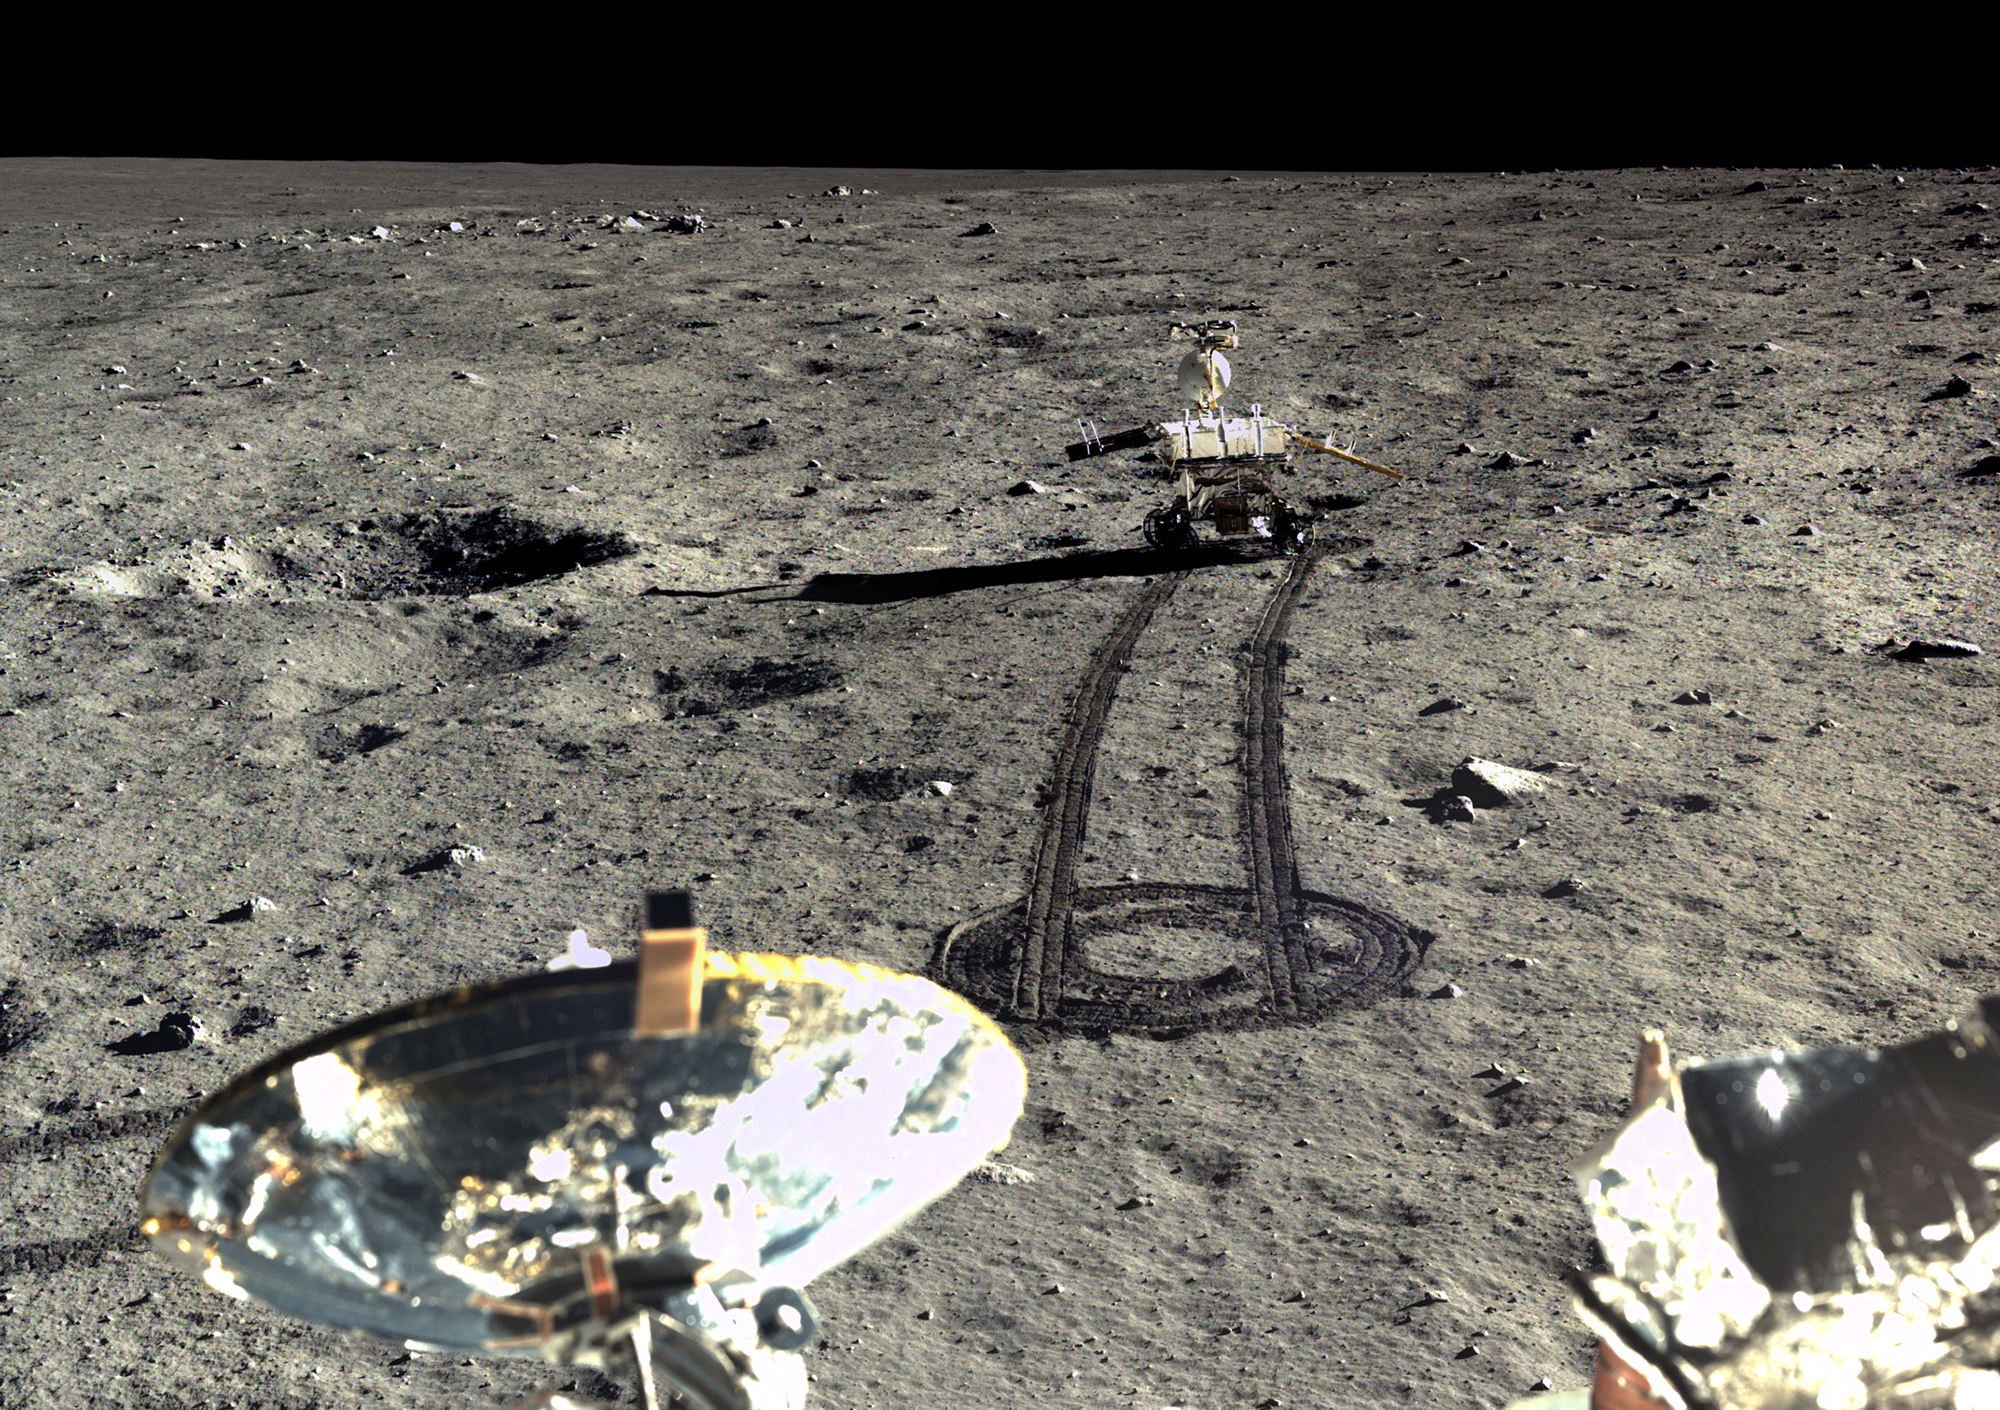 Rover Yutu driving off lander Chang'e 3